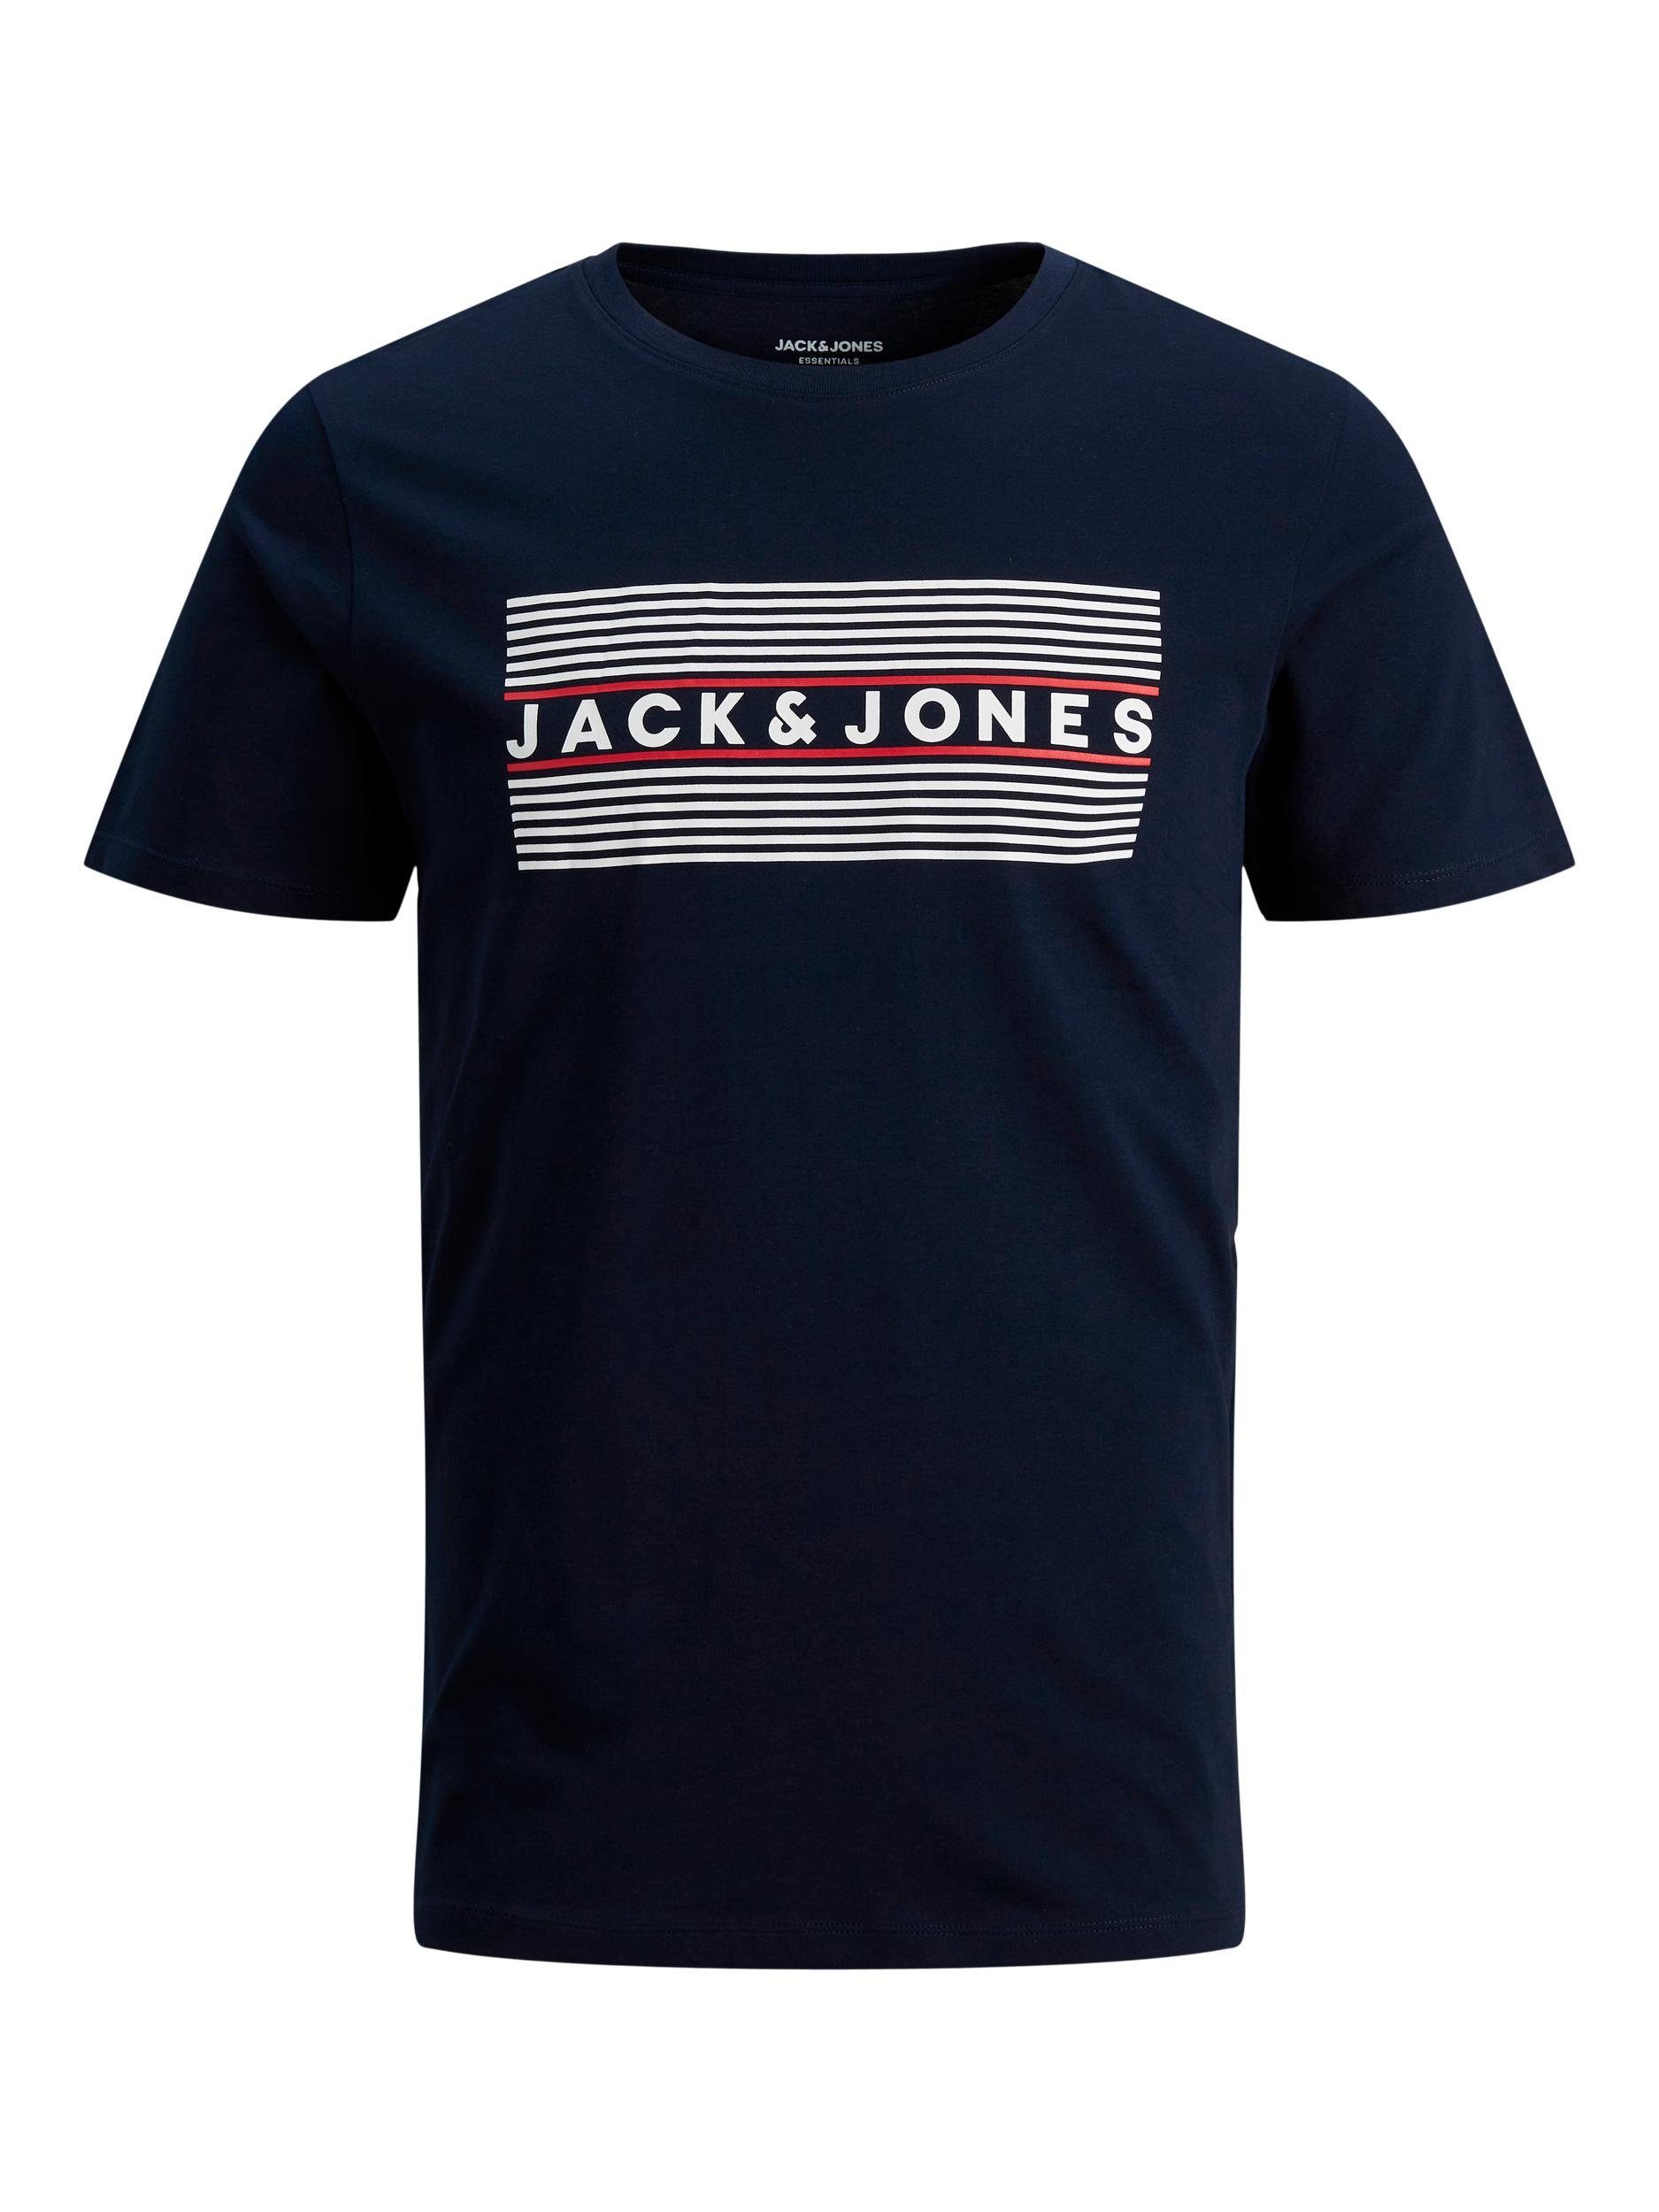 O-NECK Junior Jones JJECORP navy LOGO JNR & T-Shirt TEE Jack blazer/PLAY2